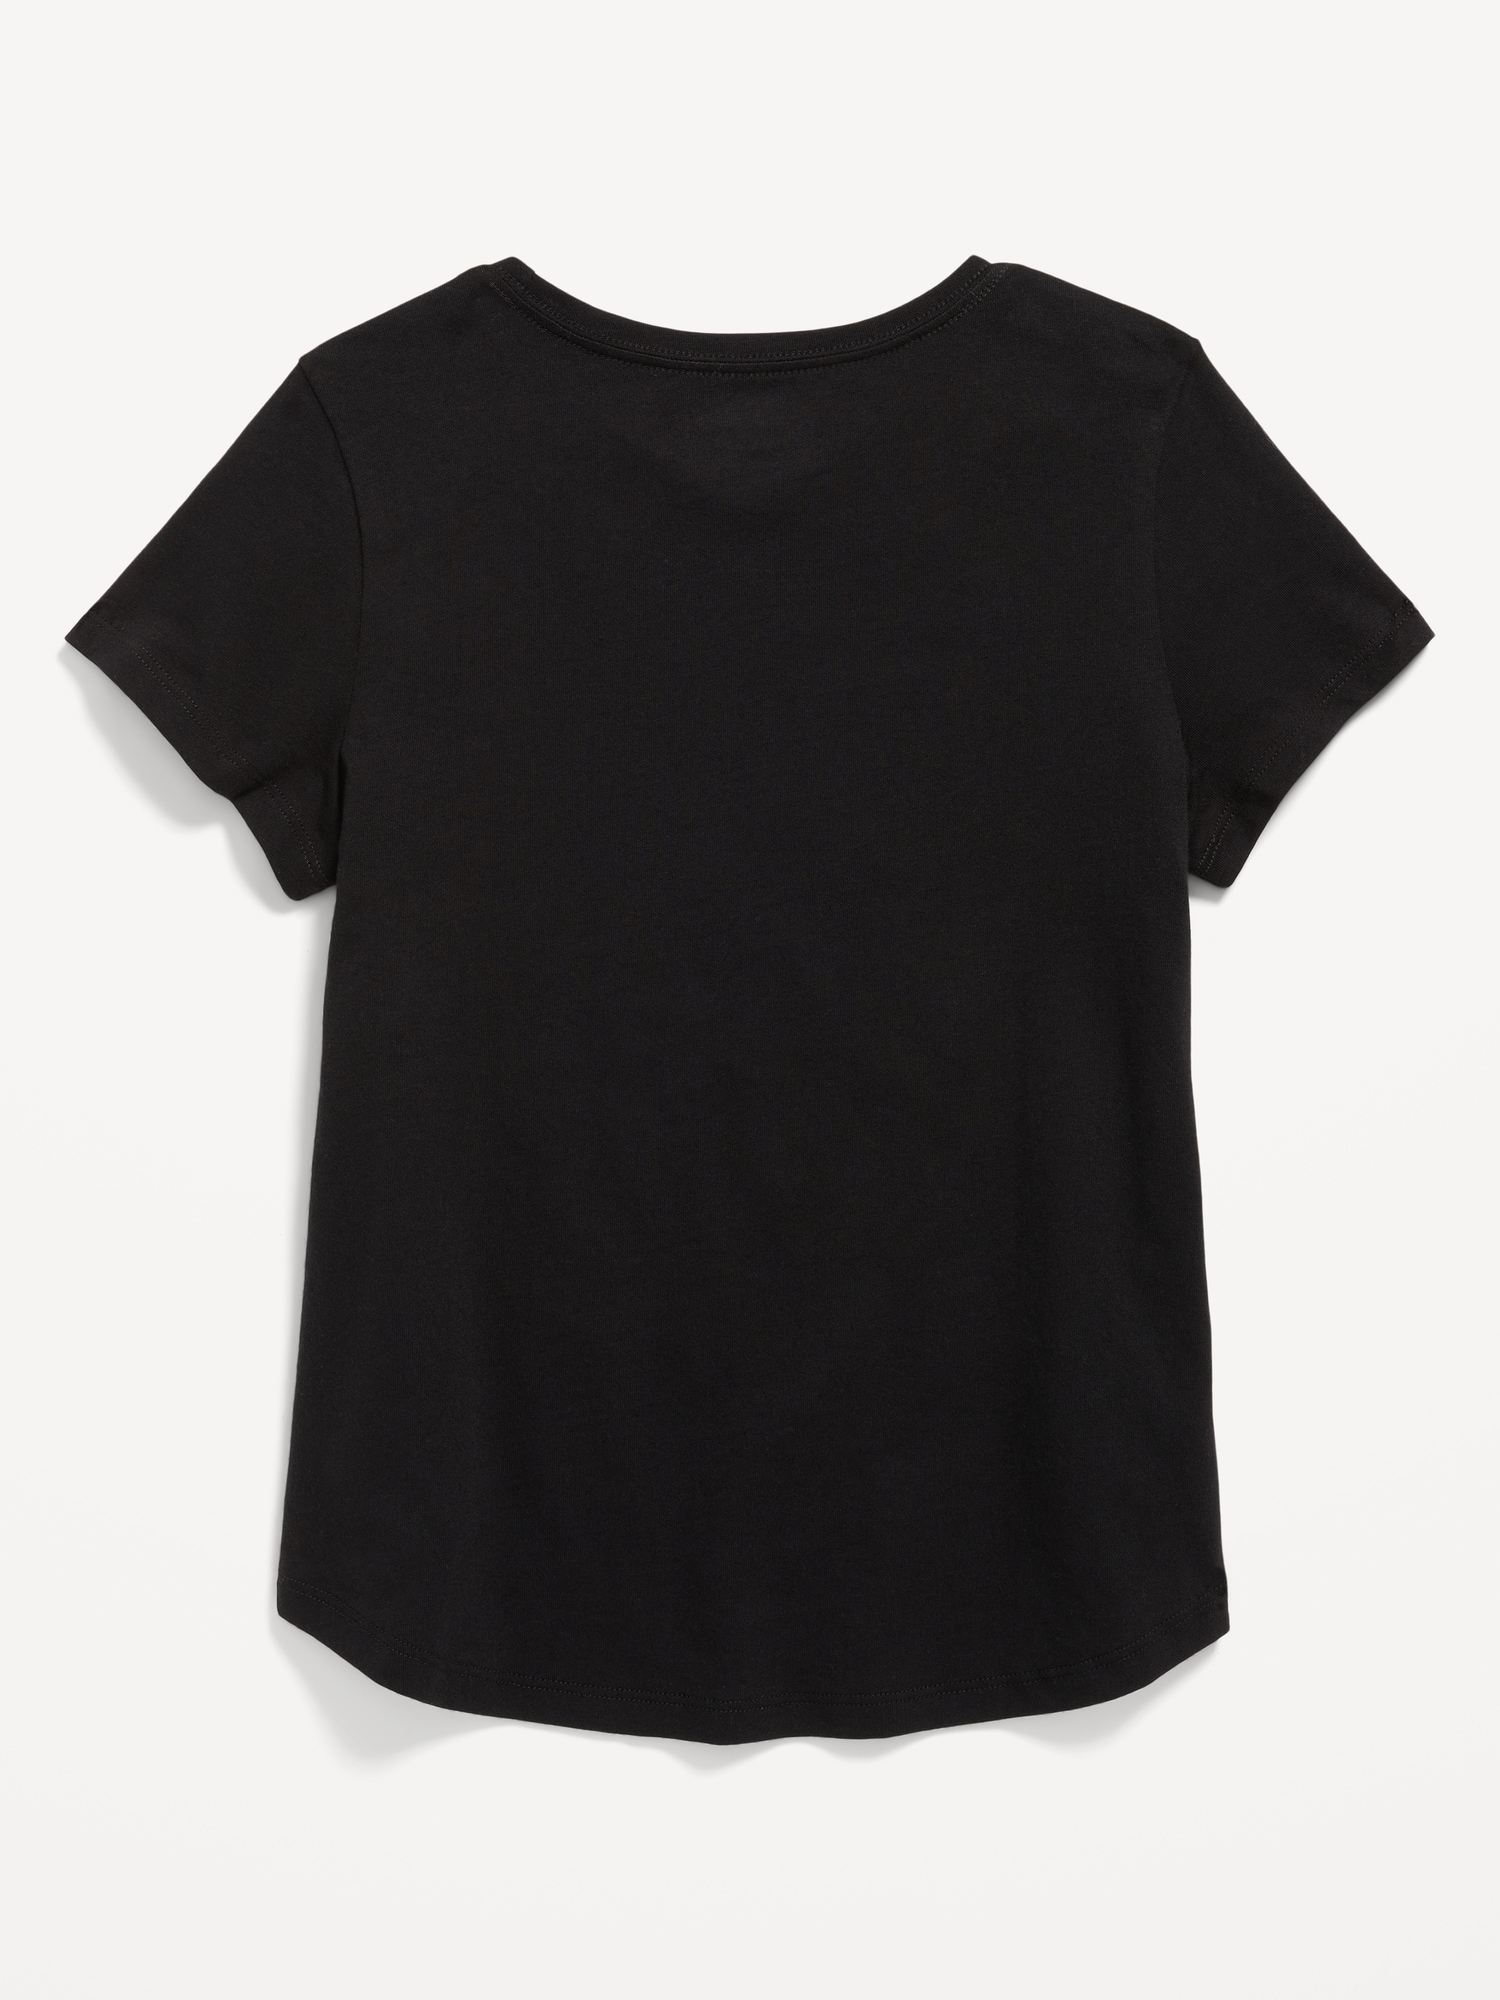 Short-Sleeve Licensed Graphic T-Shirt for Girls